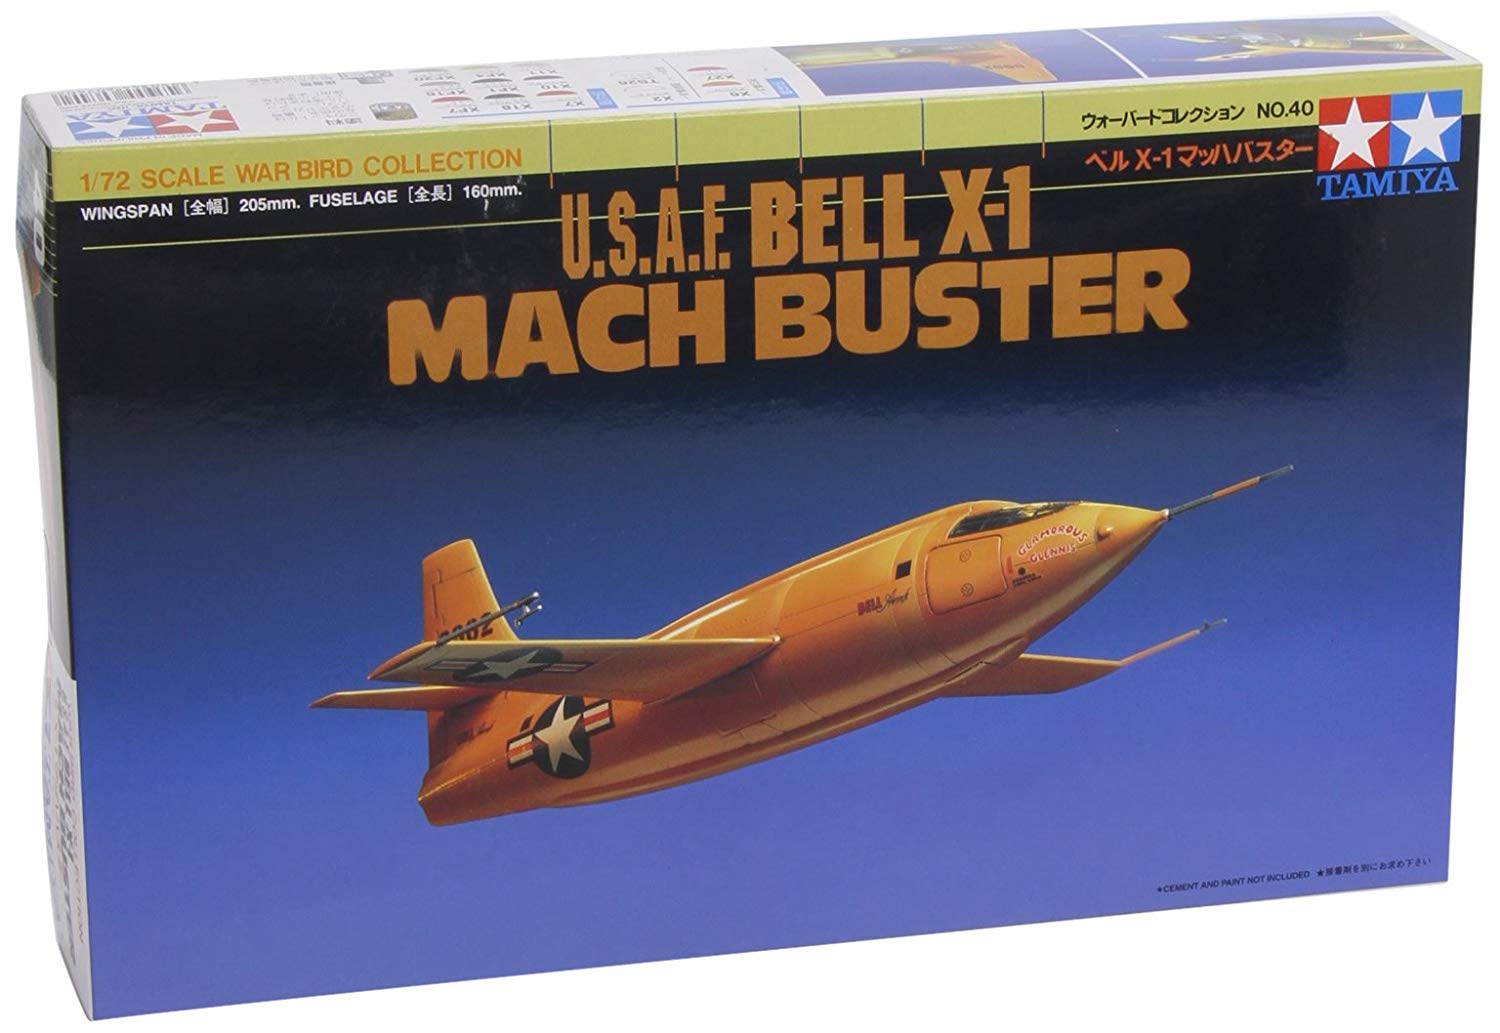 U.S.A.F Bell X-1 Mach Buster - 1:72 Scale Aircraft - Tamiya